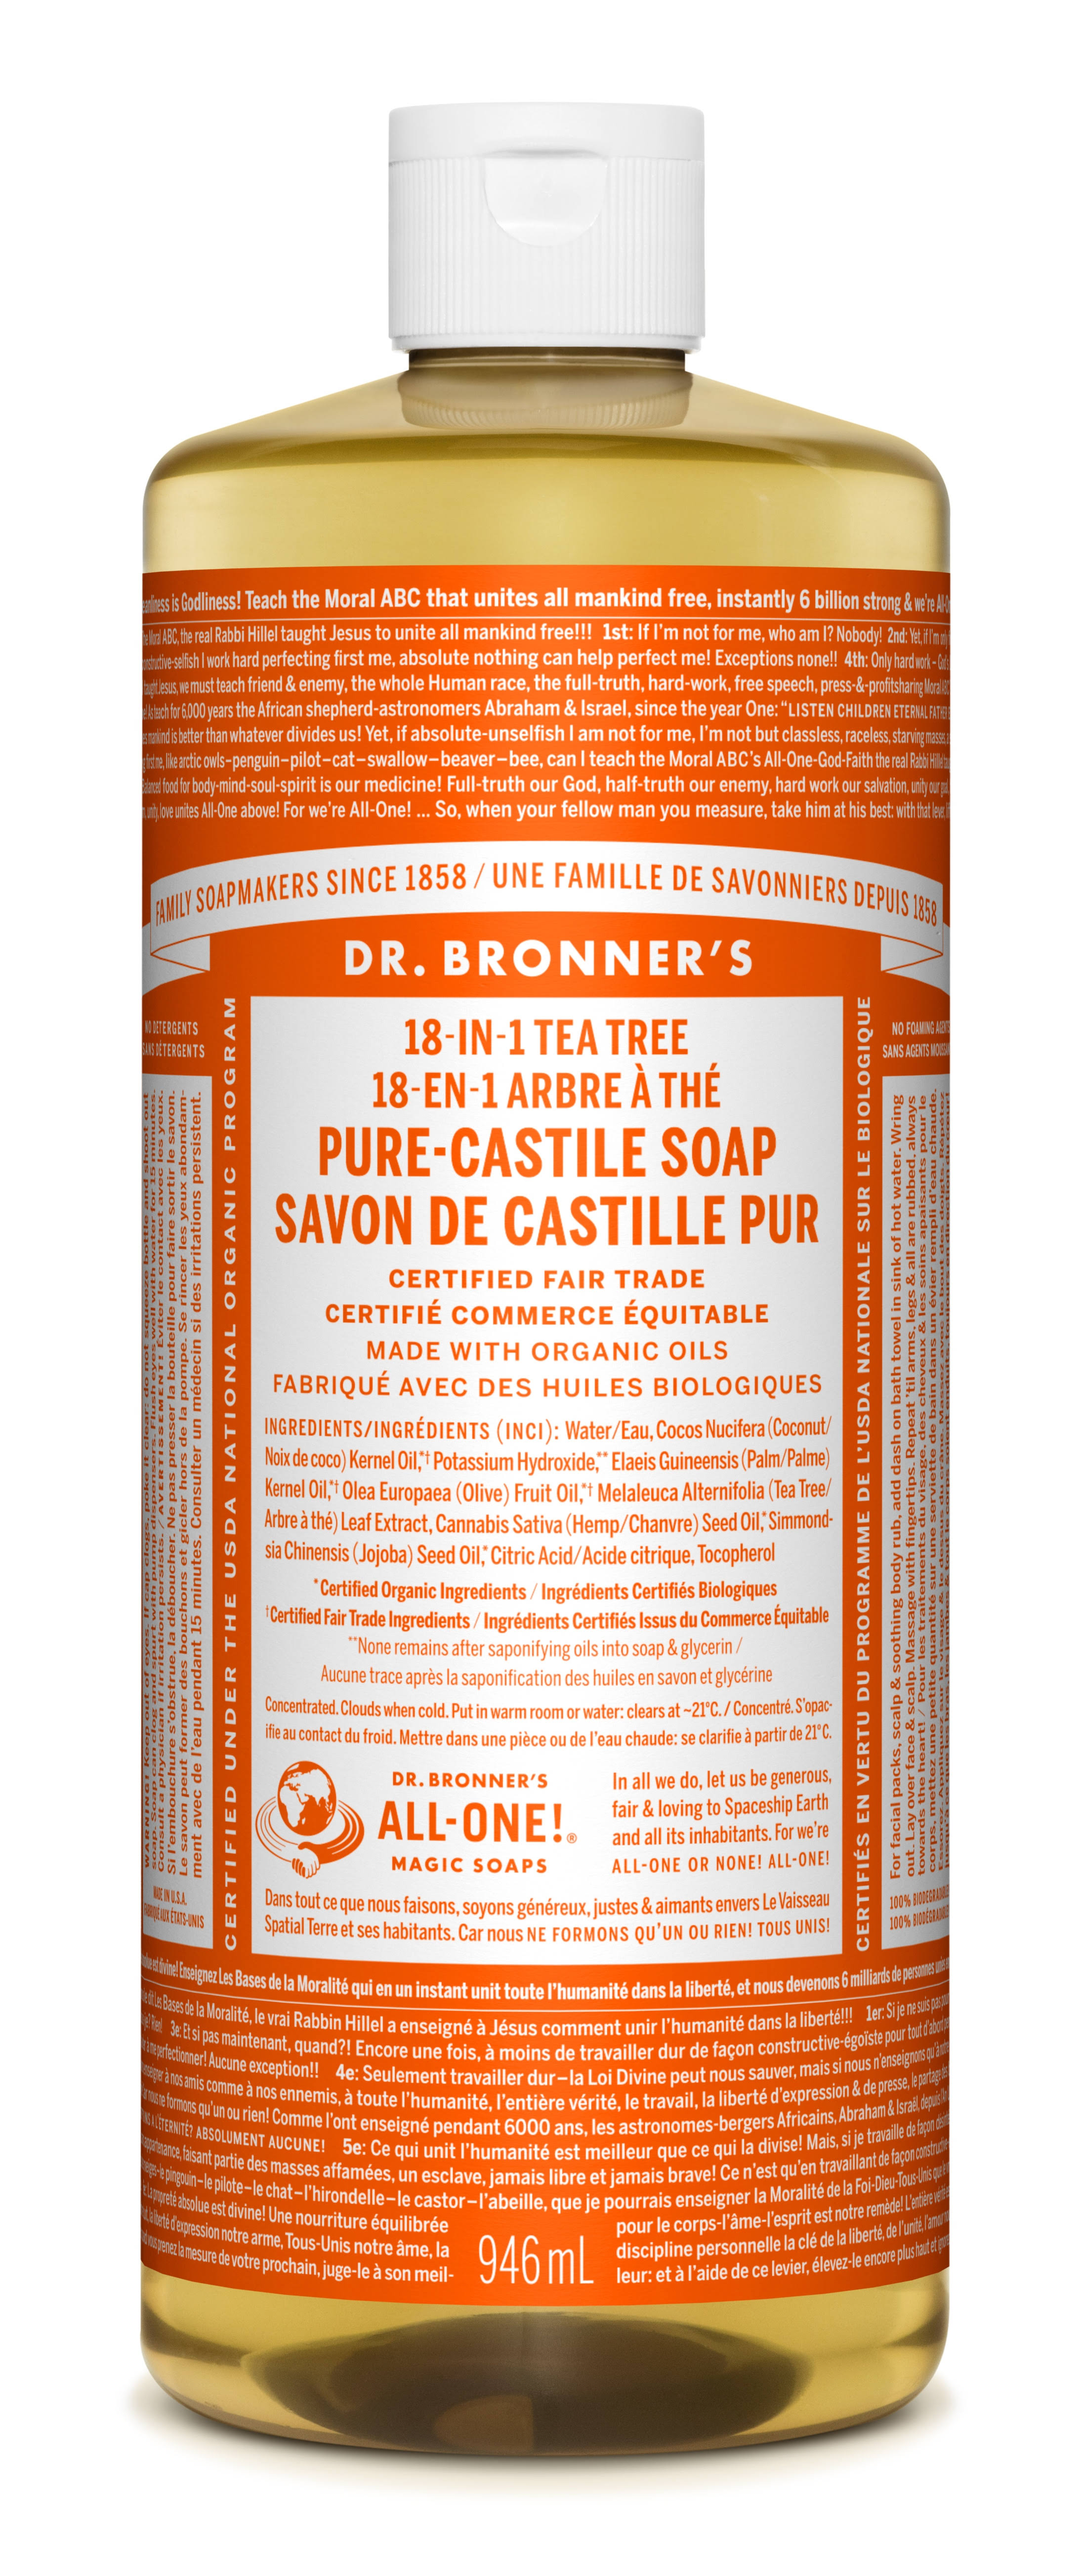 Dr. Bronner's Magic Soaps 18-in-1 Hemp Pure-Castile Soap - Tea Tree